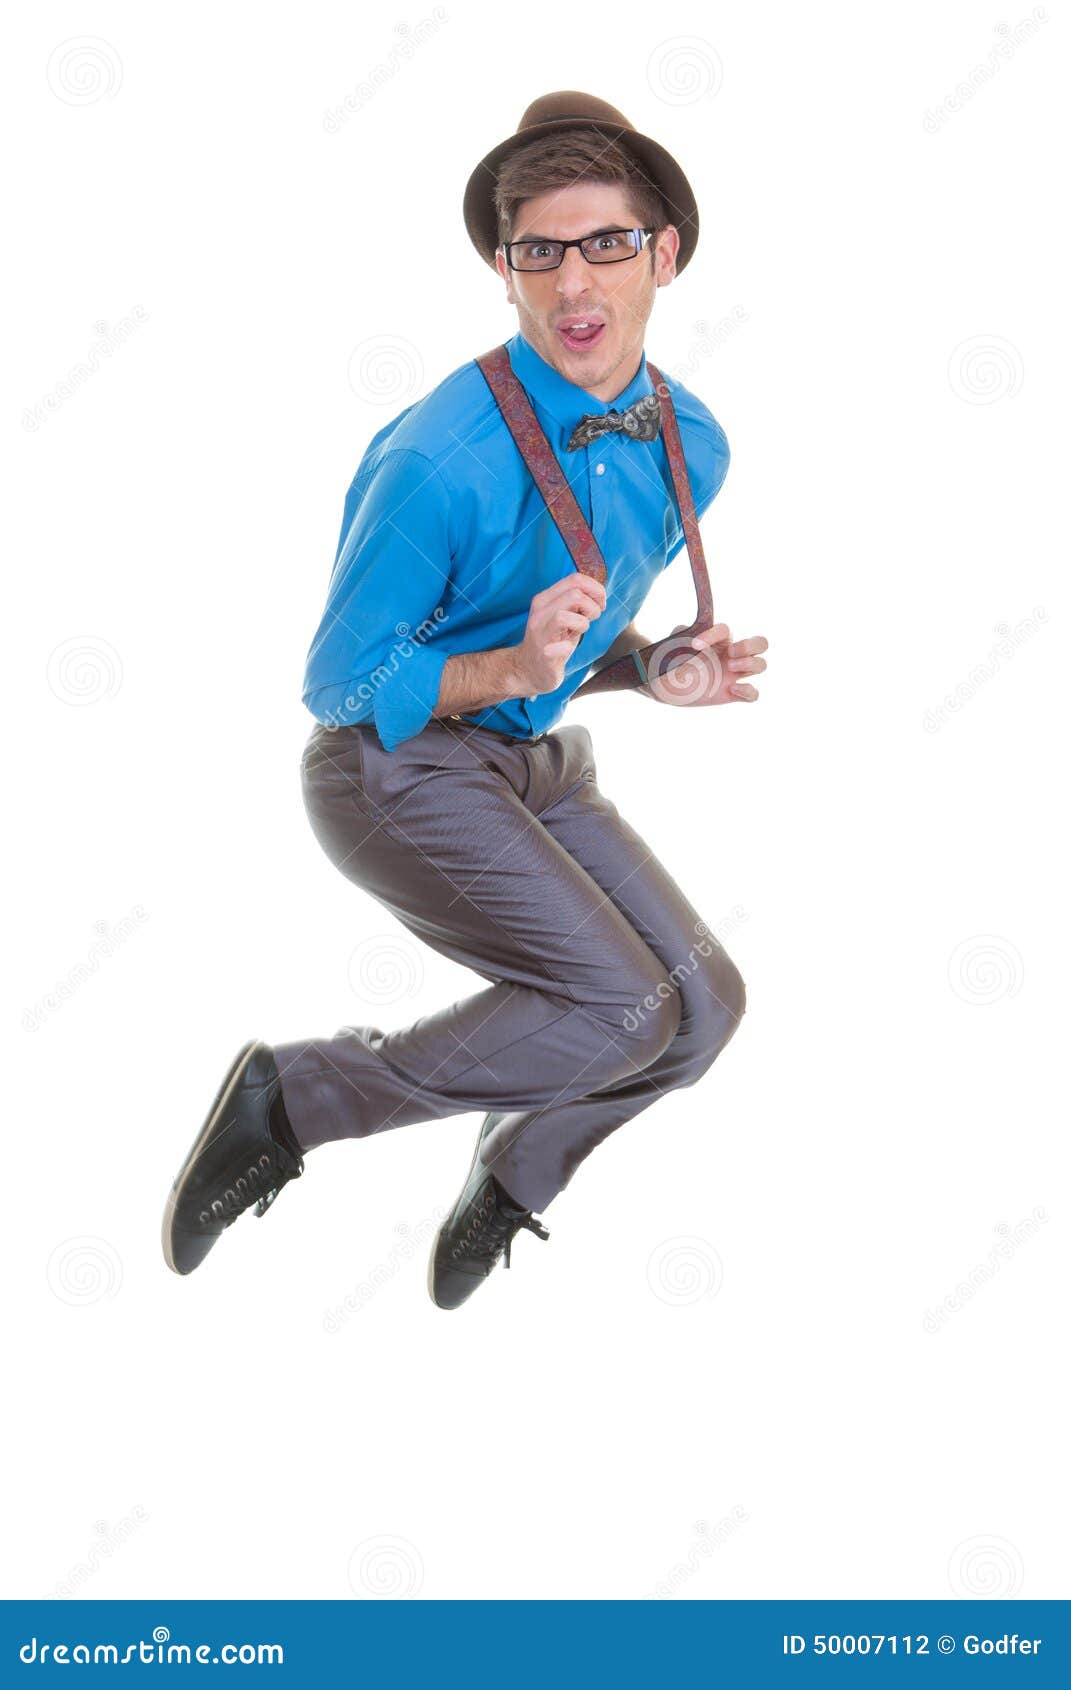 Goofy business man jumping stock photo. Image of playful - 50007112